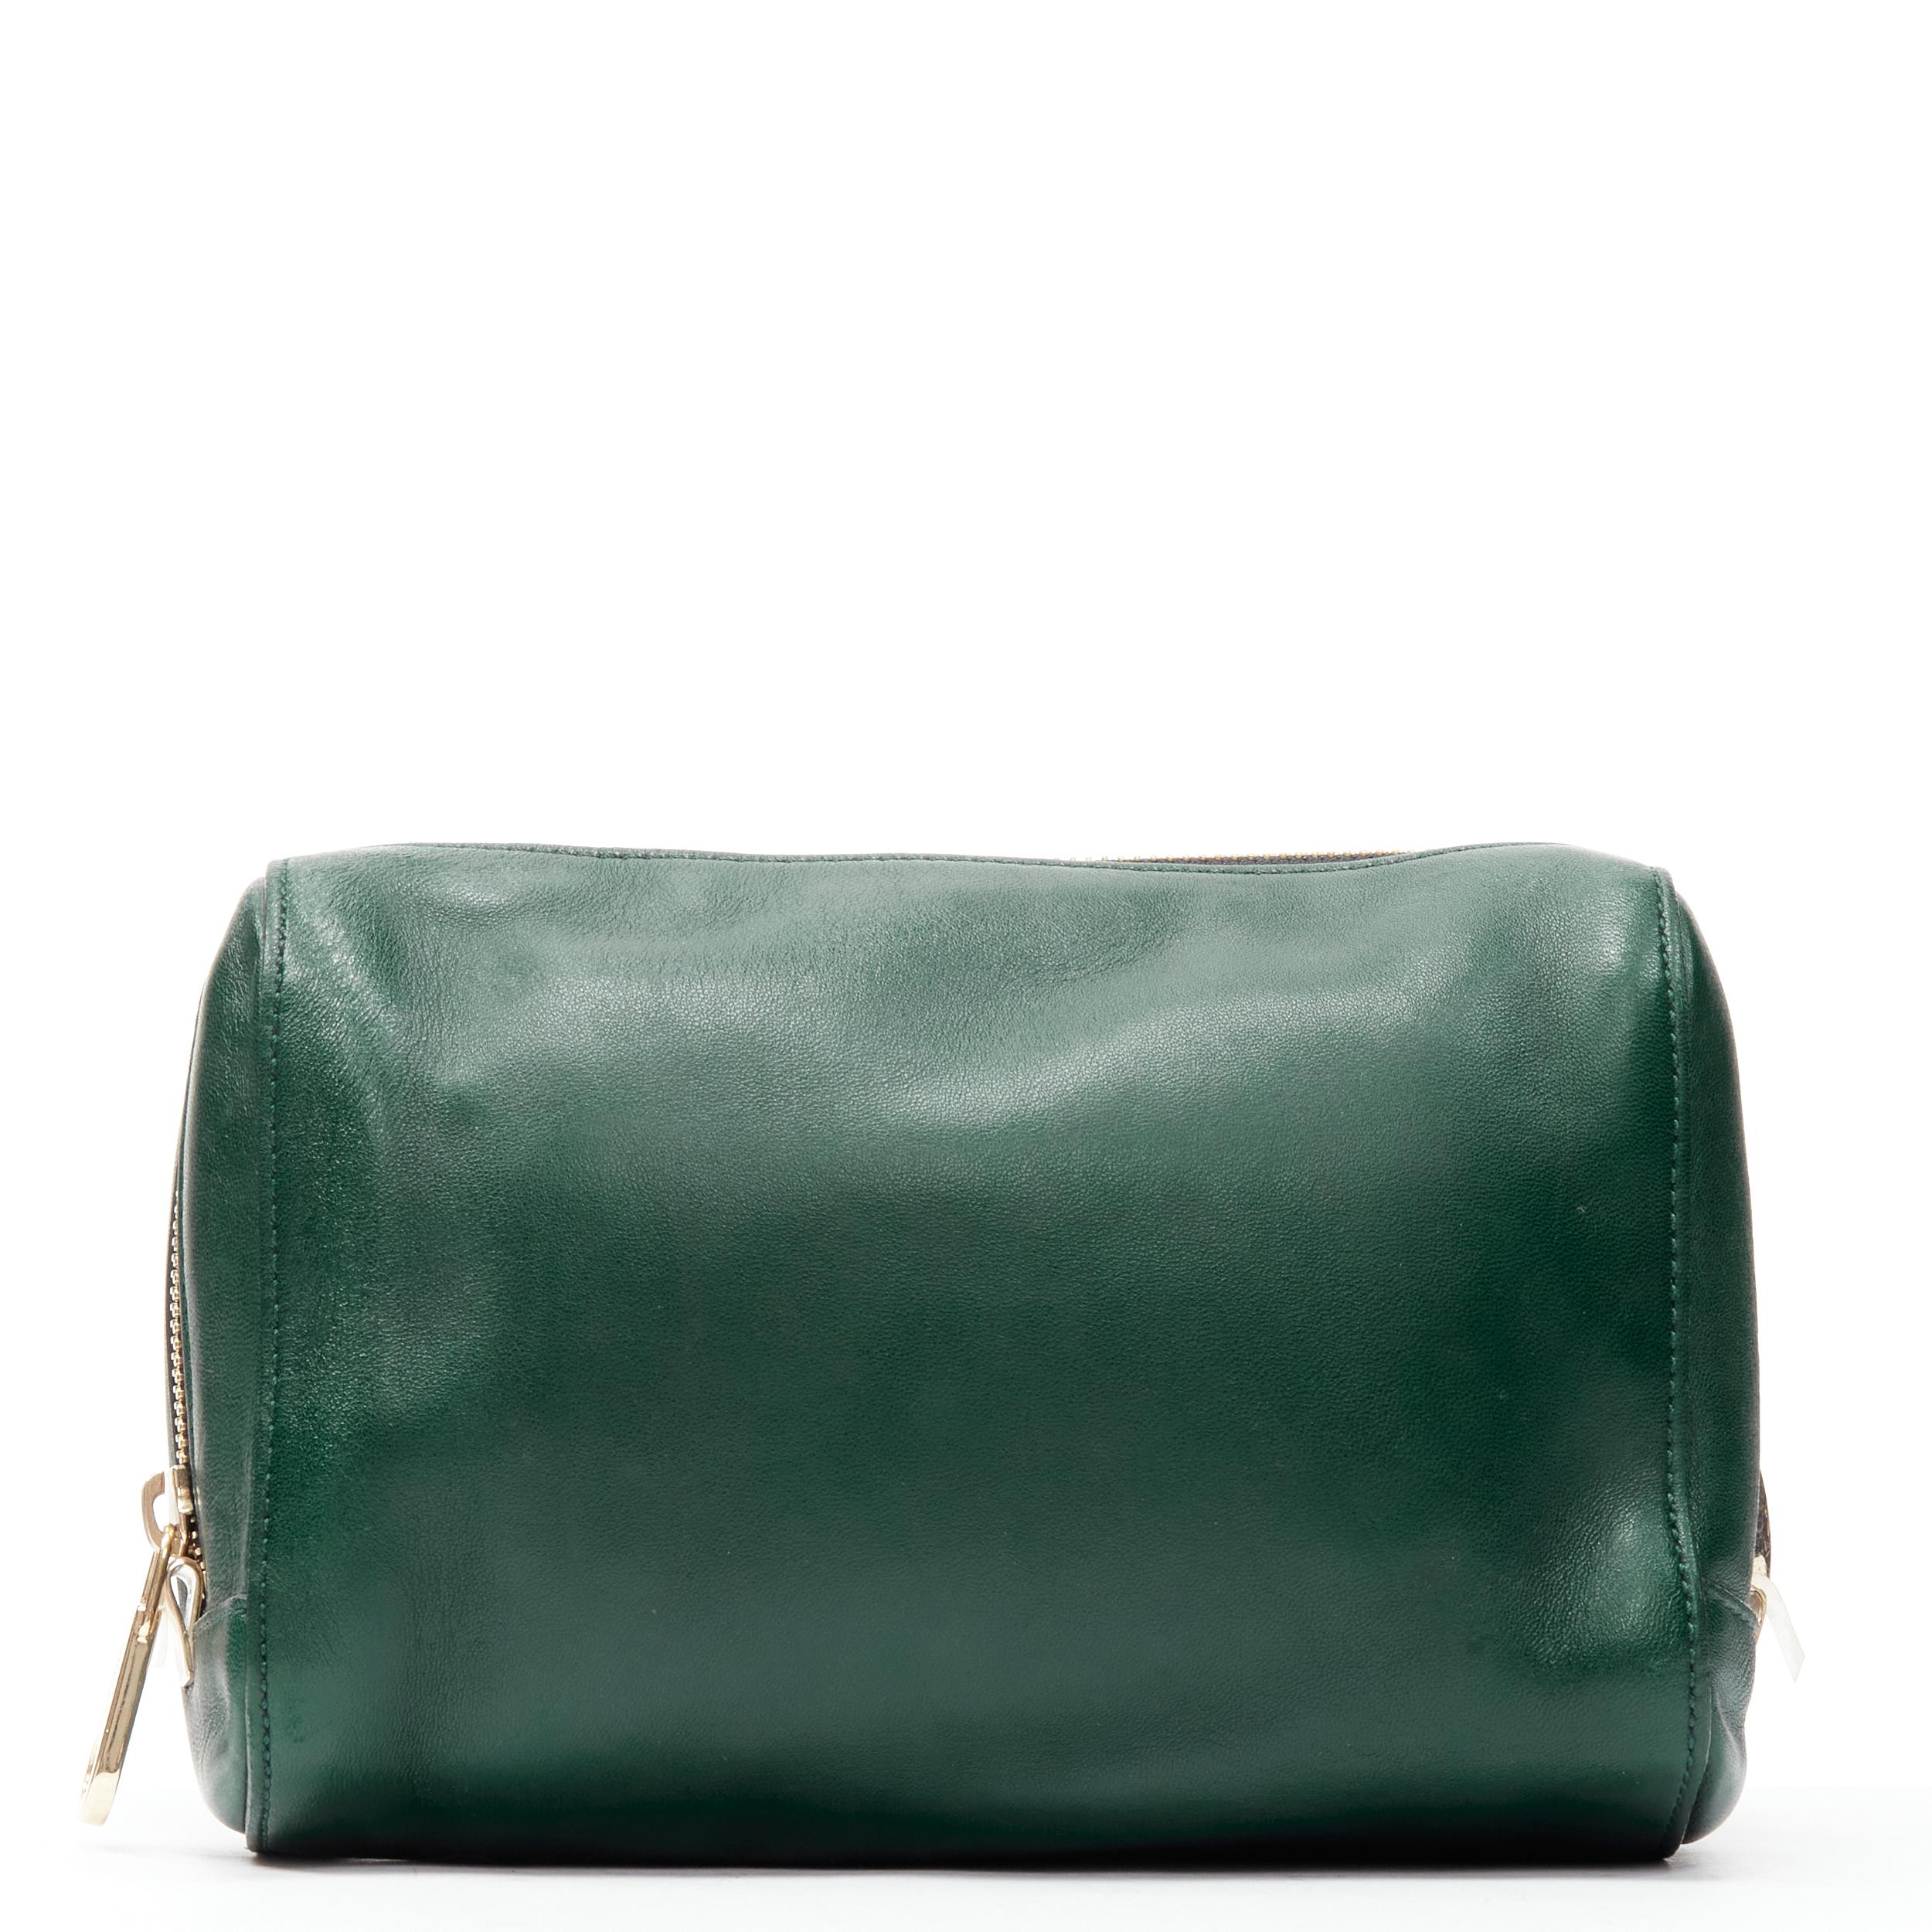 Black CHLOE dark green leather gold bangle cuff zip pouch clutch